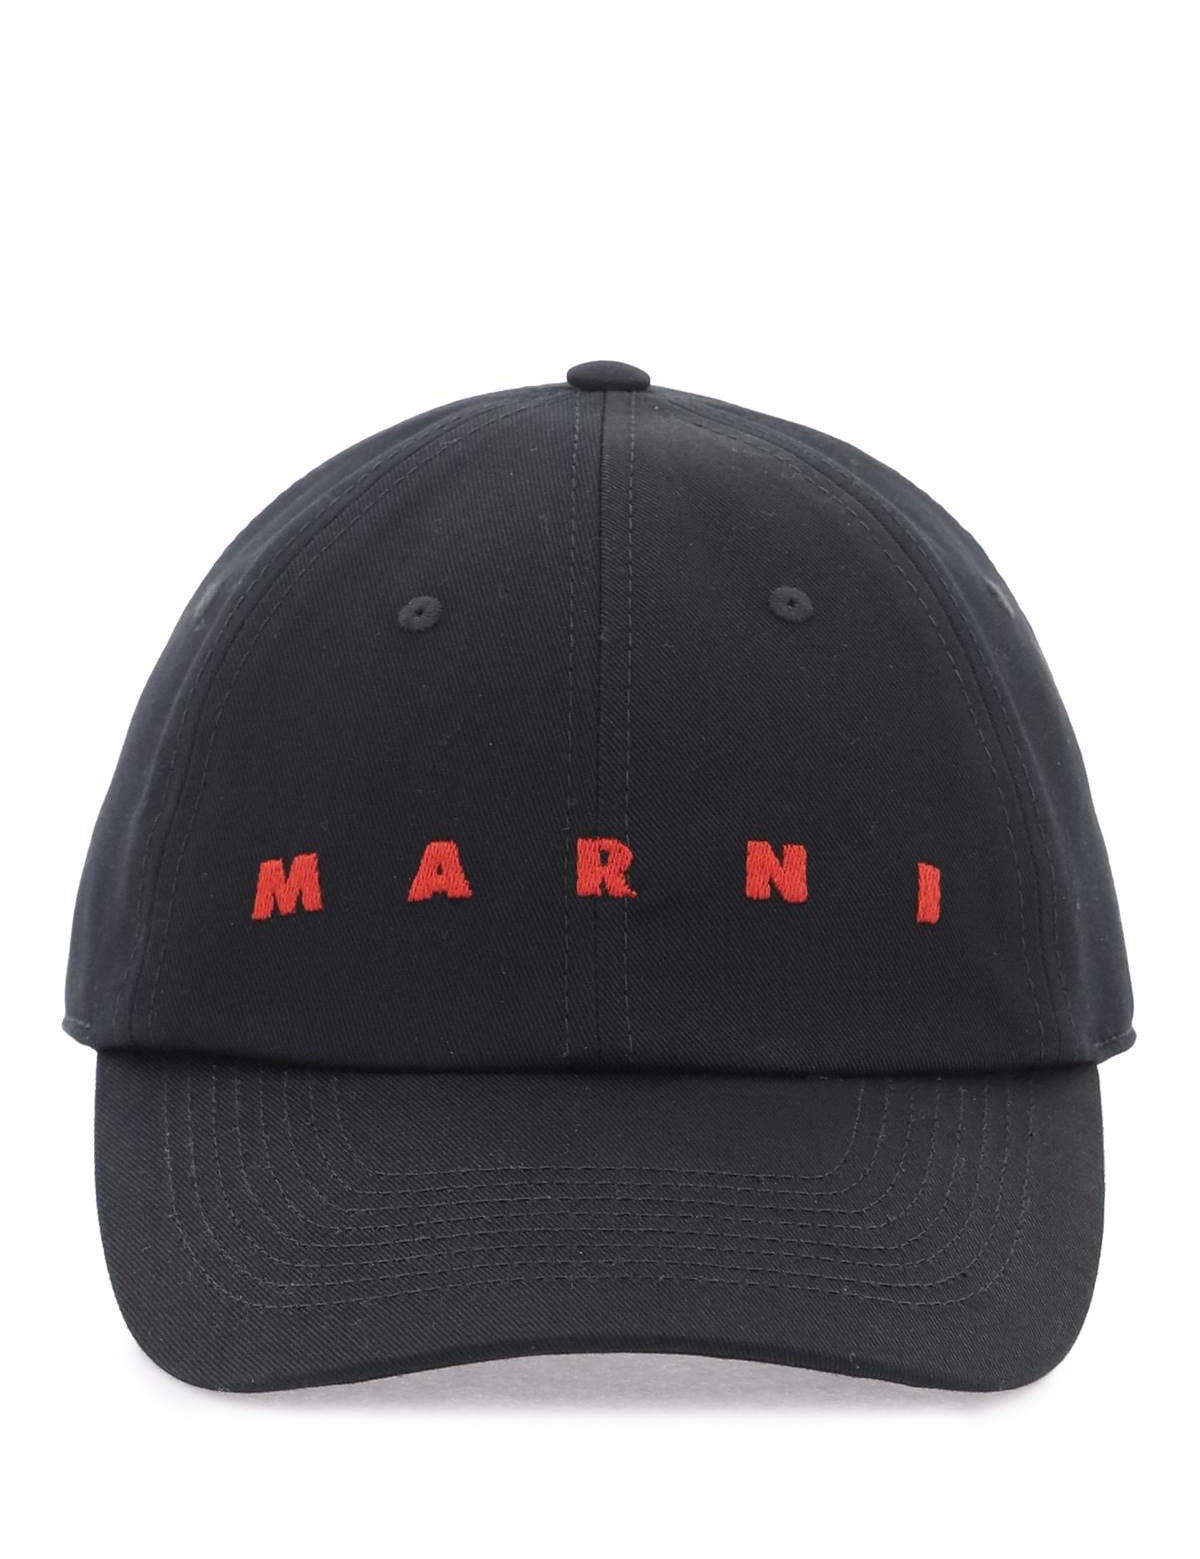 marni-embroidered-logo-baseball-cap-with.jpg